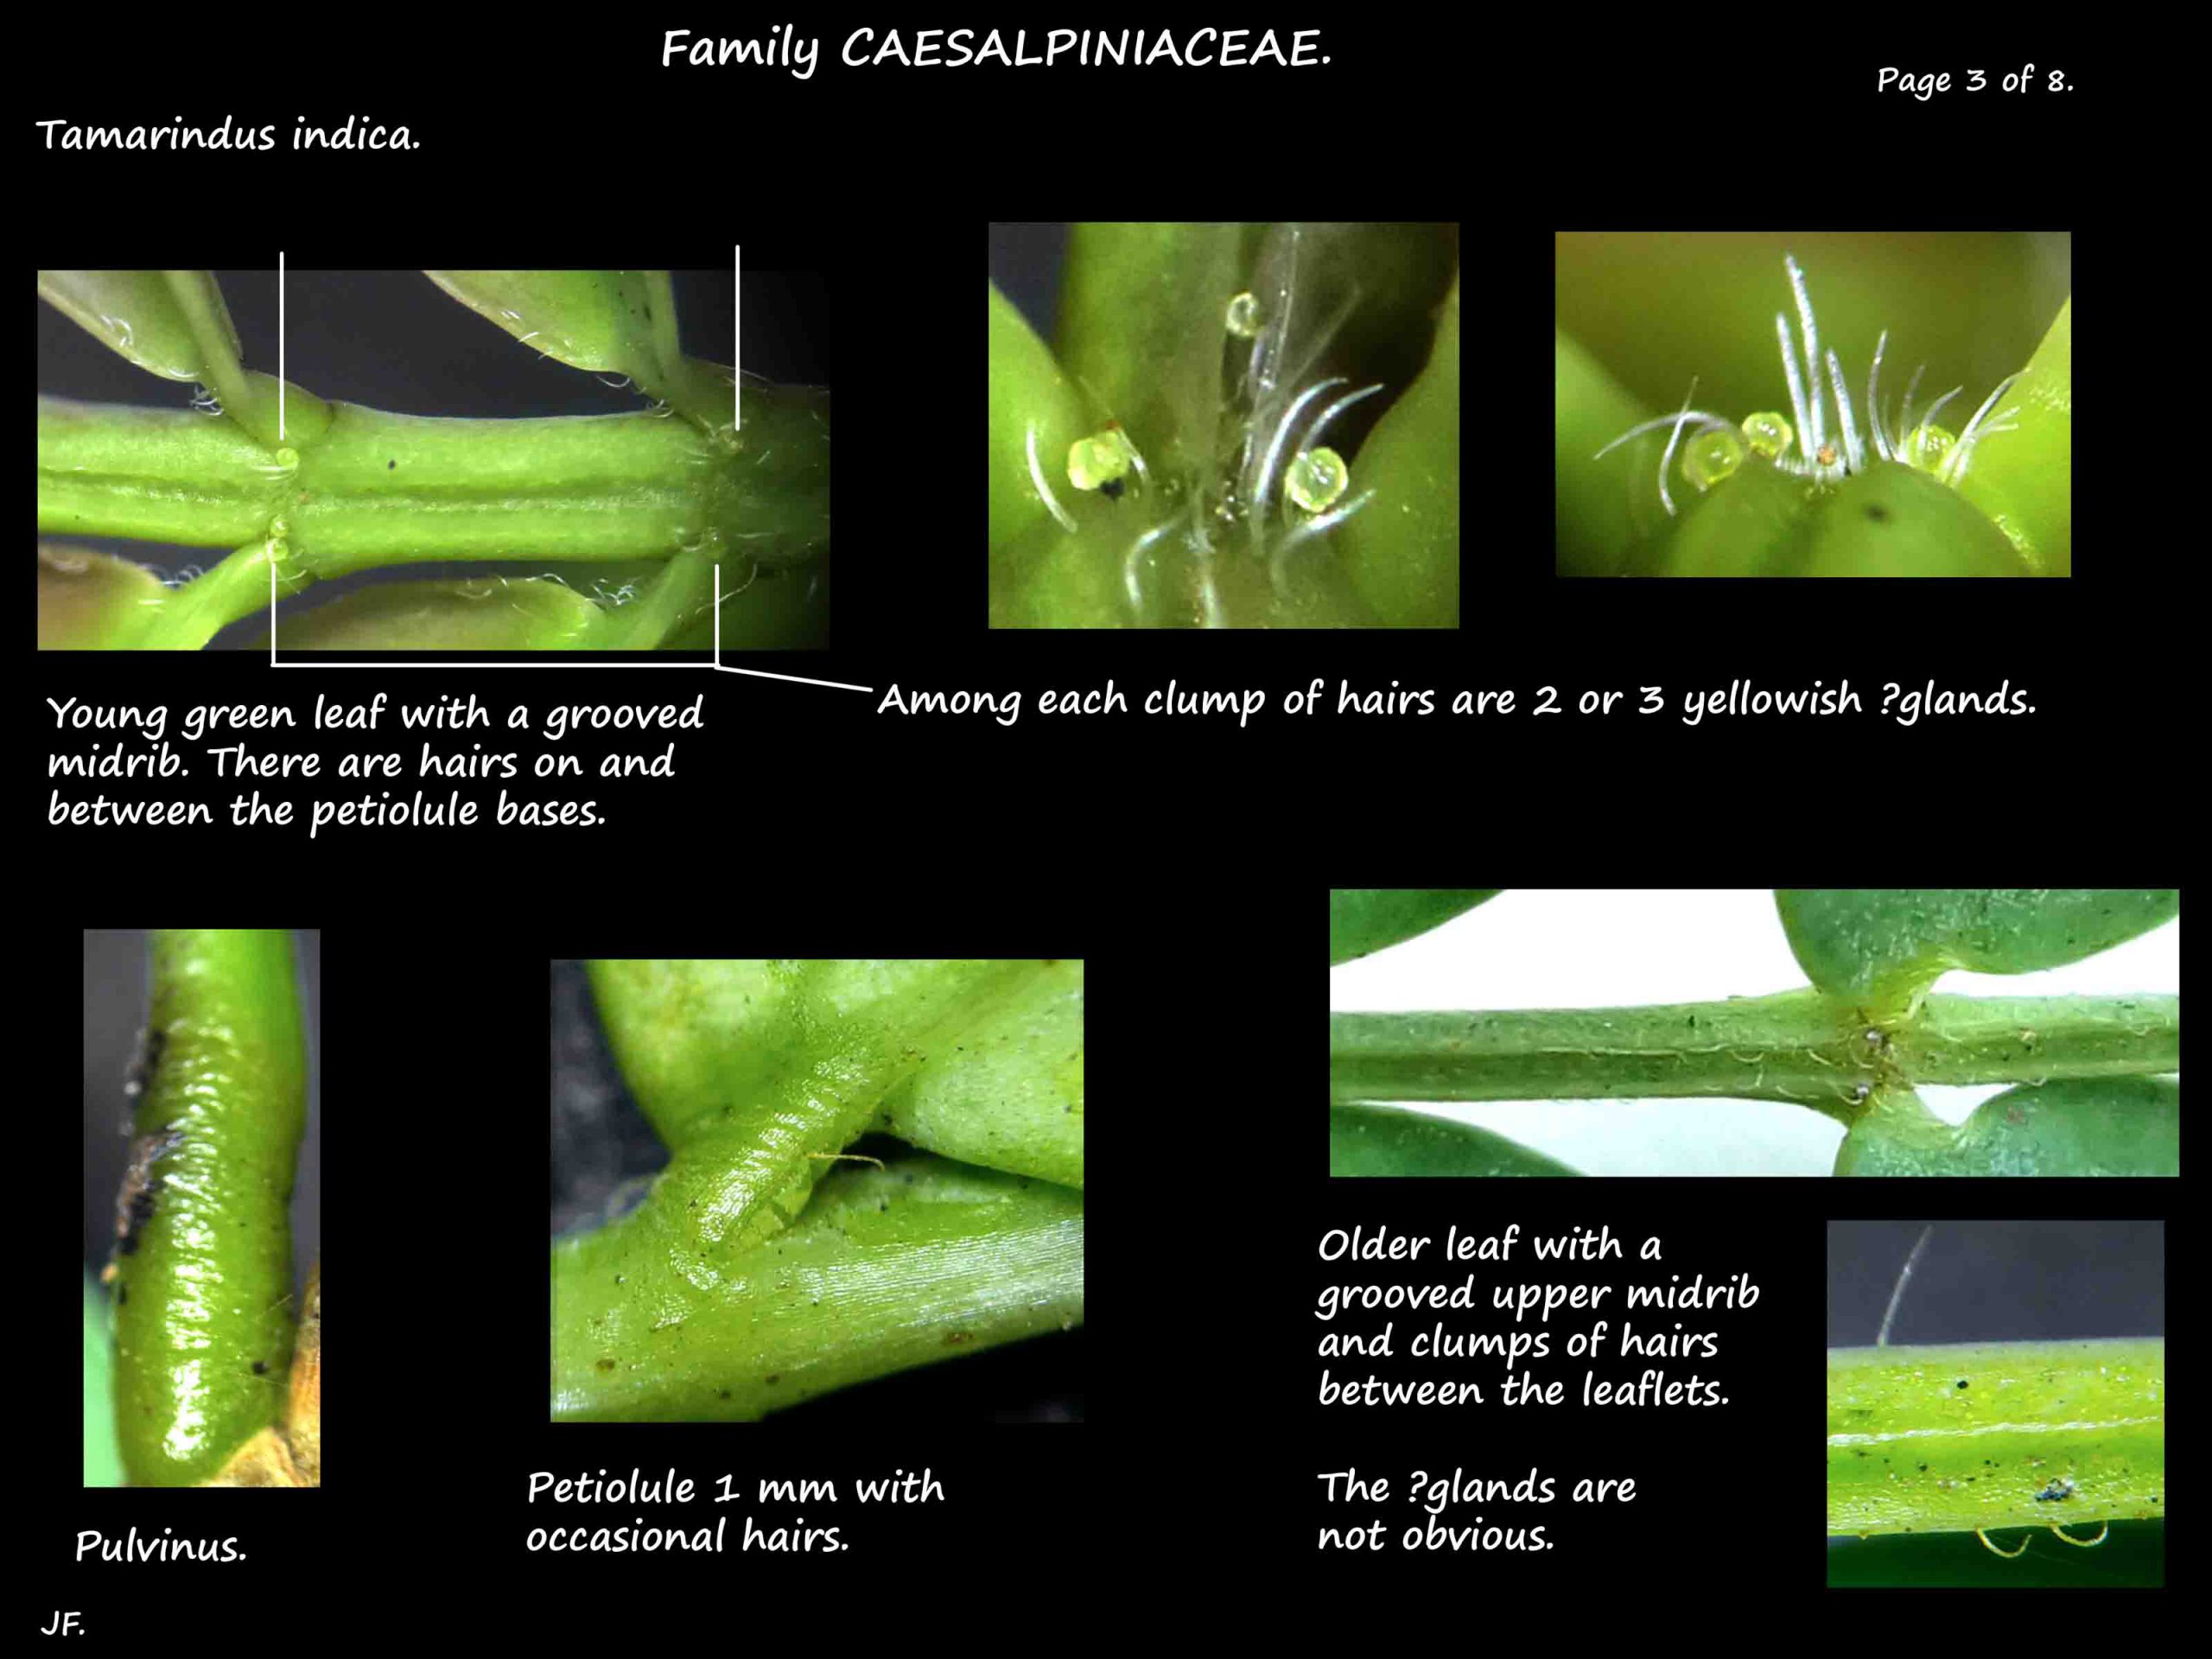 3 Tamarindus indica leaf hairs